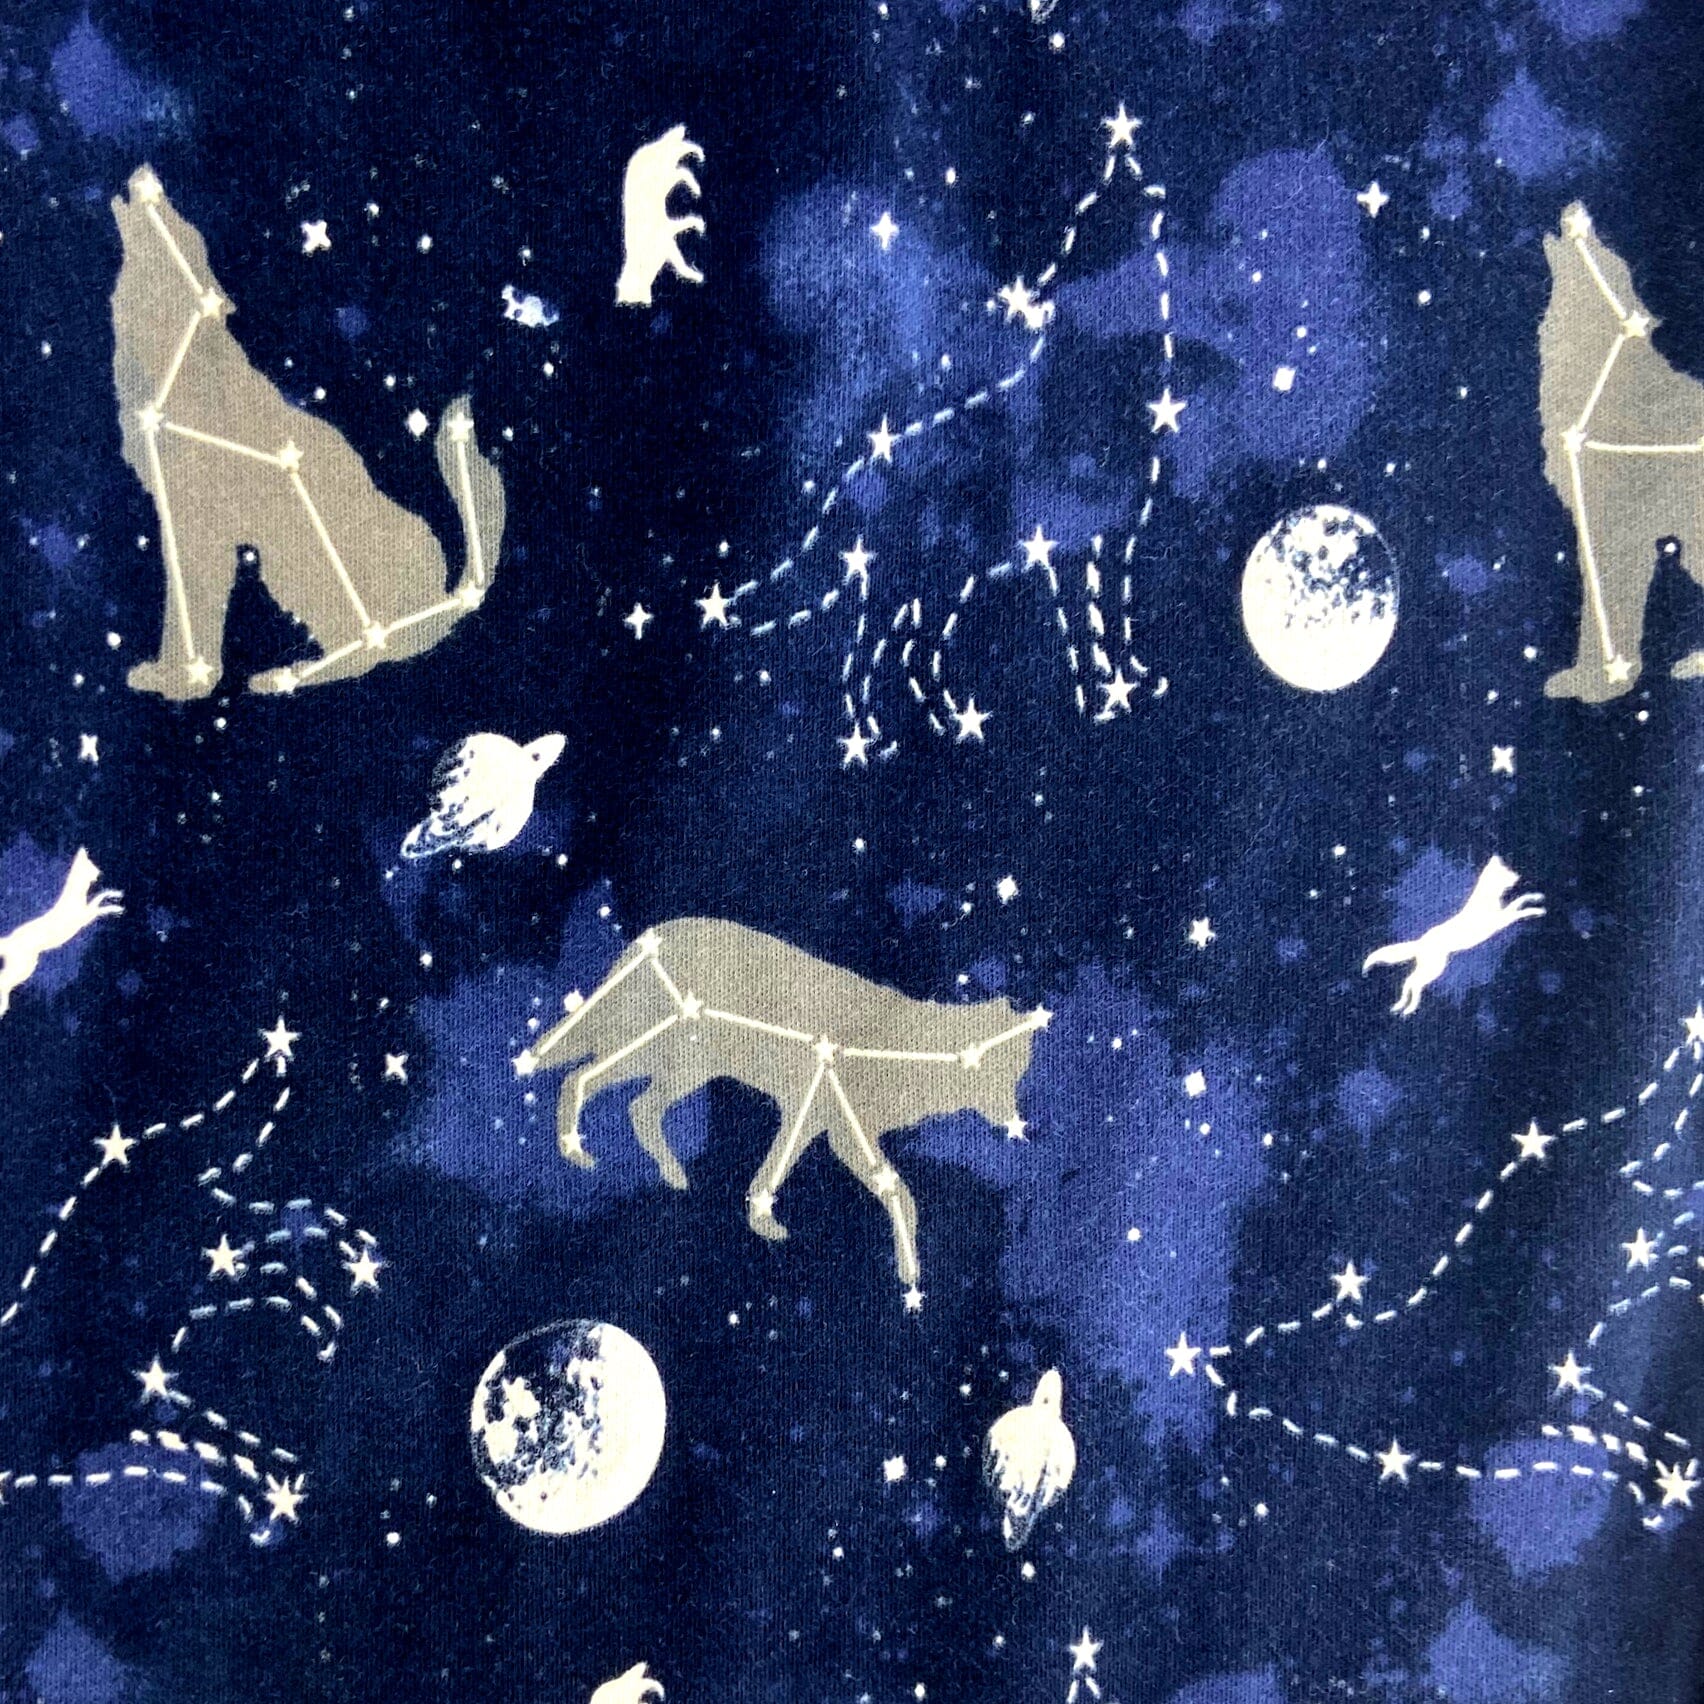 Men's Howling Wolf Star Night Sky Print Cotton Knit Long Pajama Pants